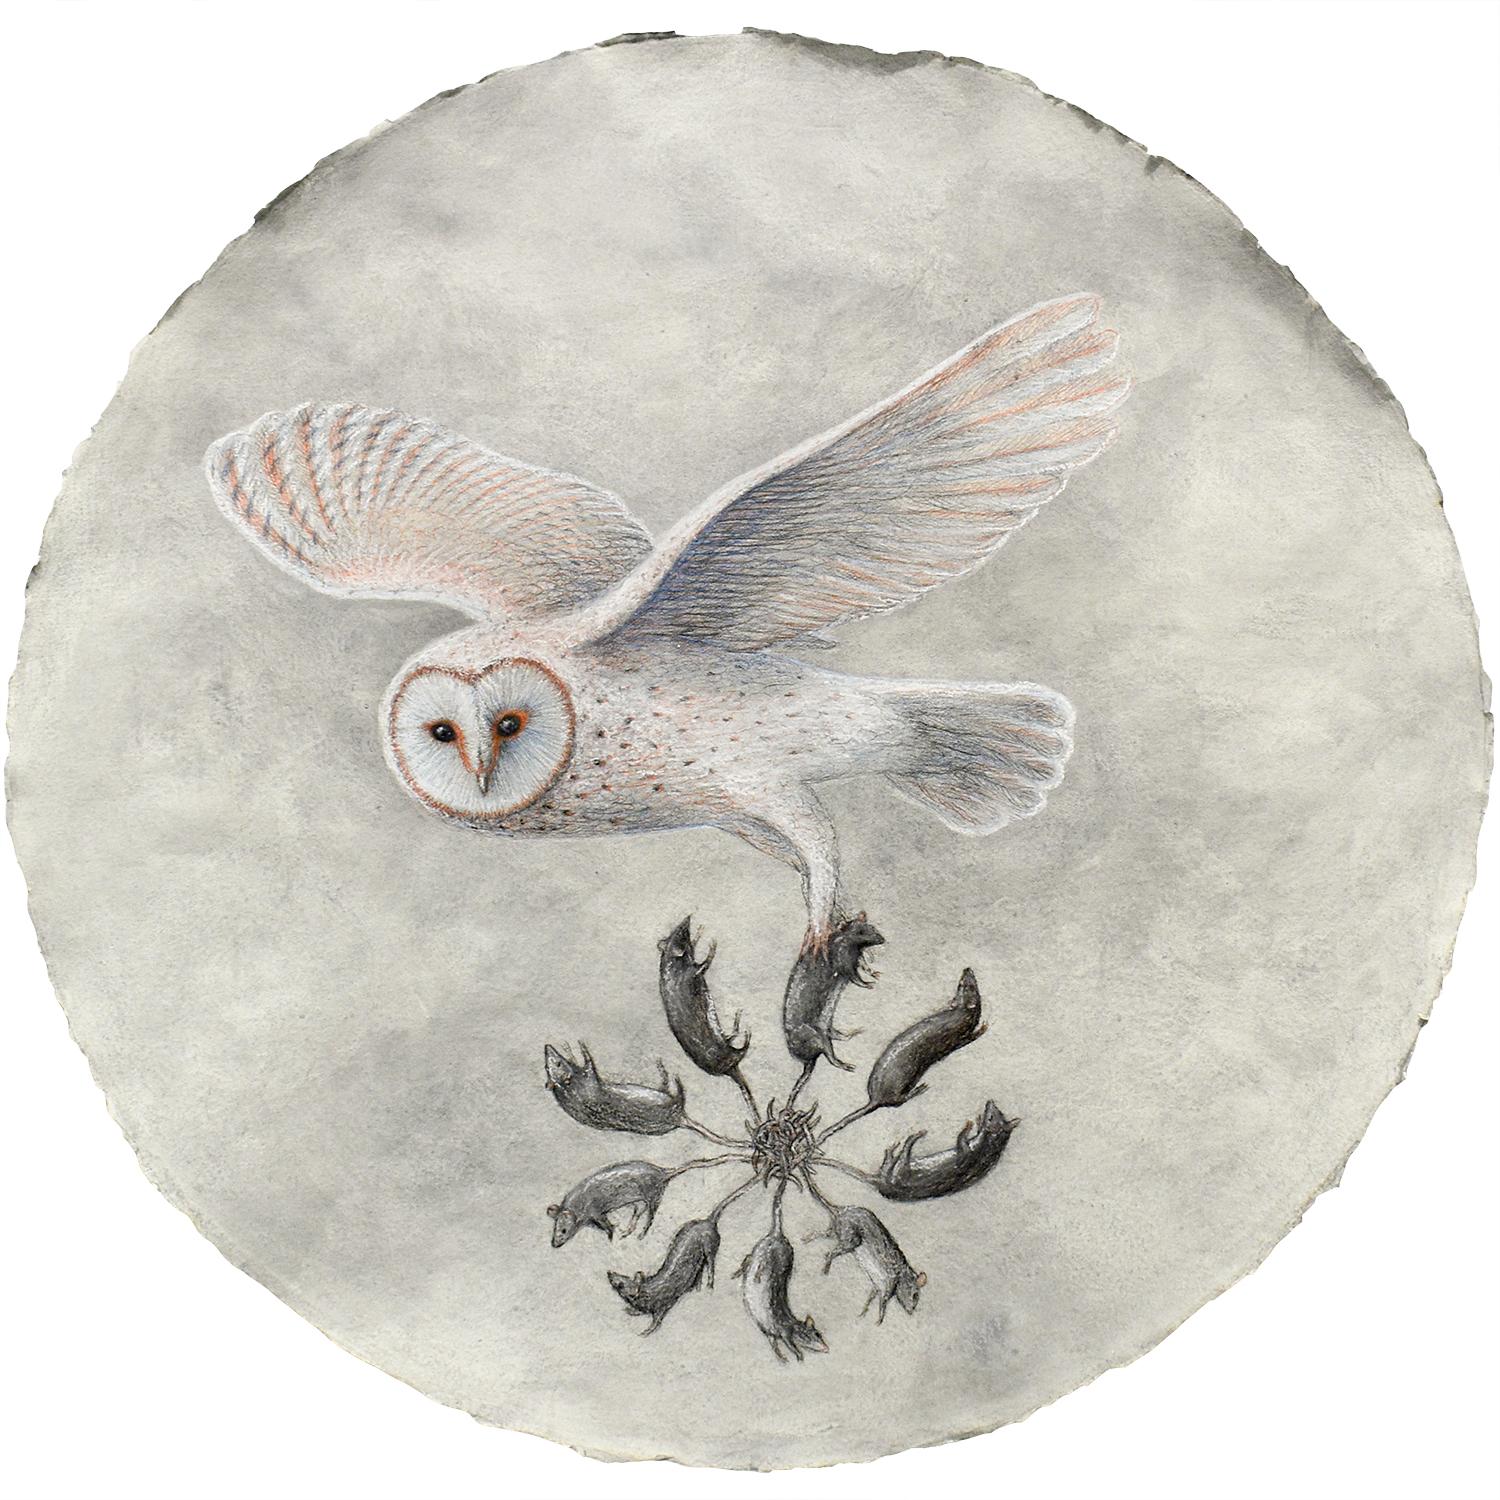 Nicholas Kahn & Richard Selesnick Animal Painting - Rat King Augury: Snow White Owl Pastel on Handmade Paper by Kahn & Selesnick